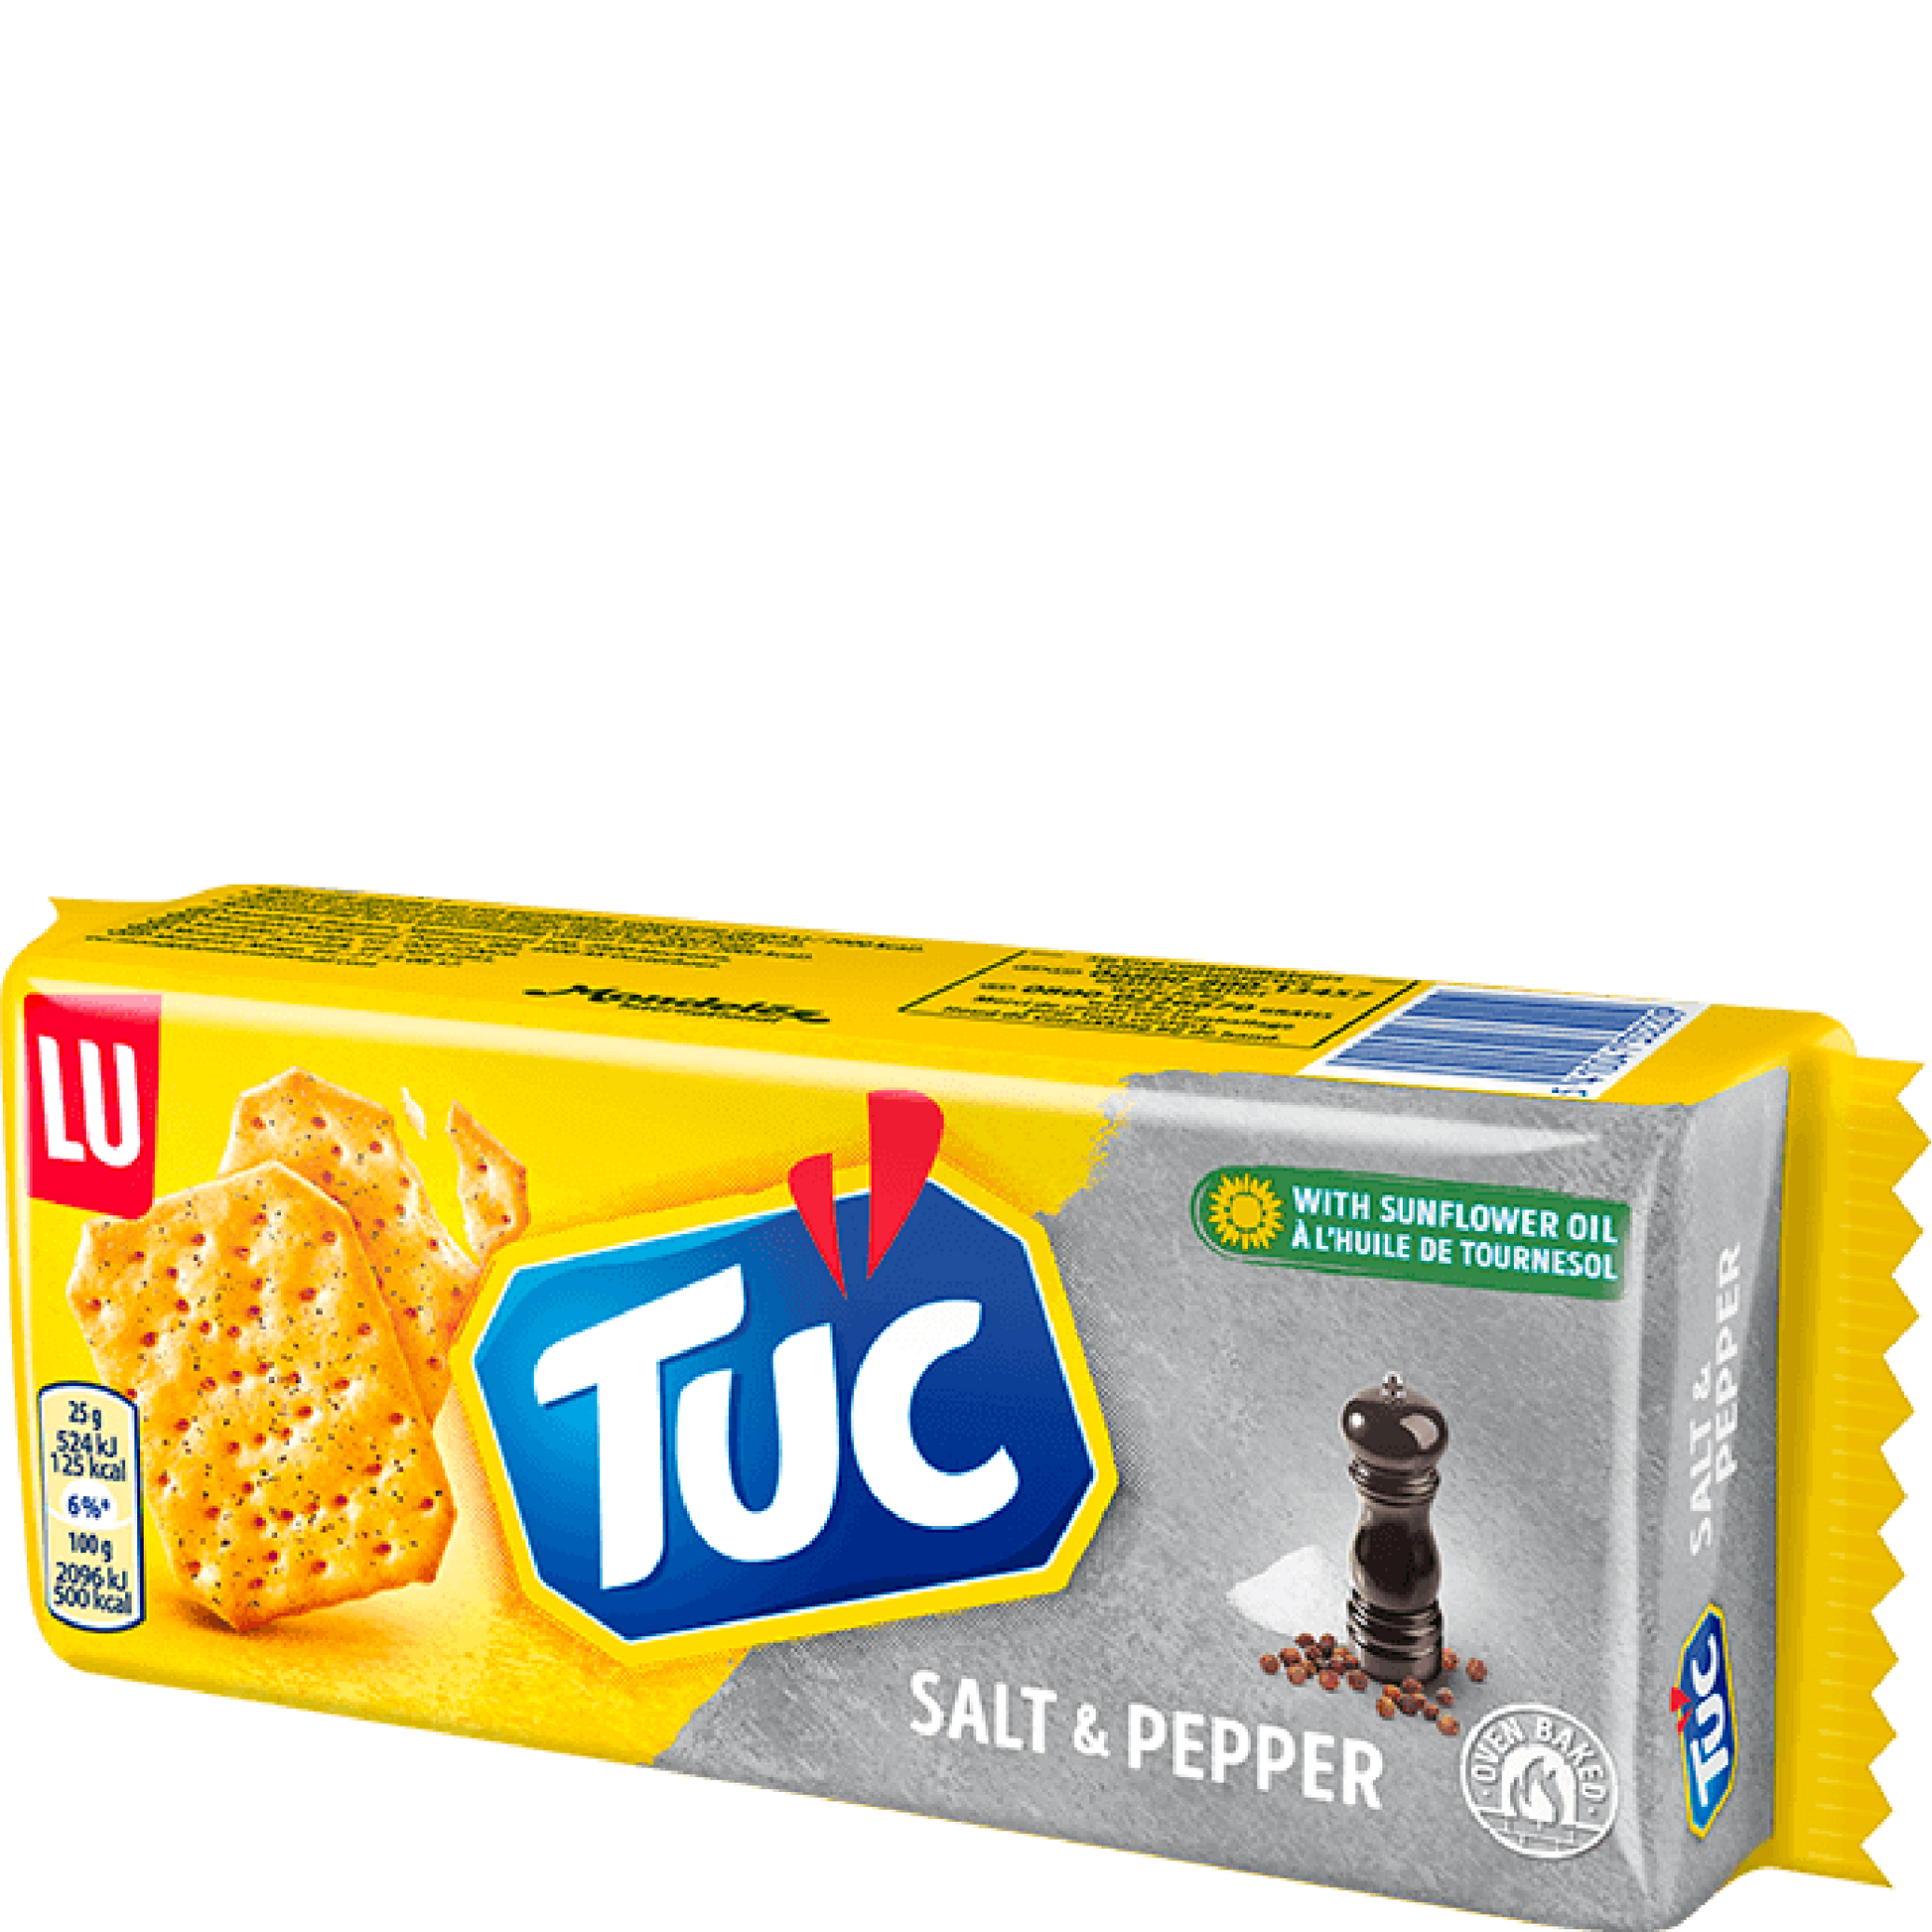 Tuc Salt & Pepper 100g - Snack-It